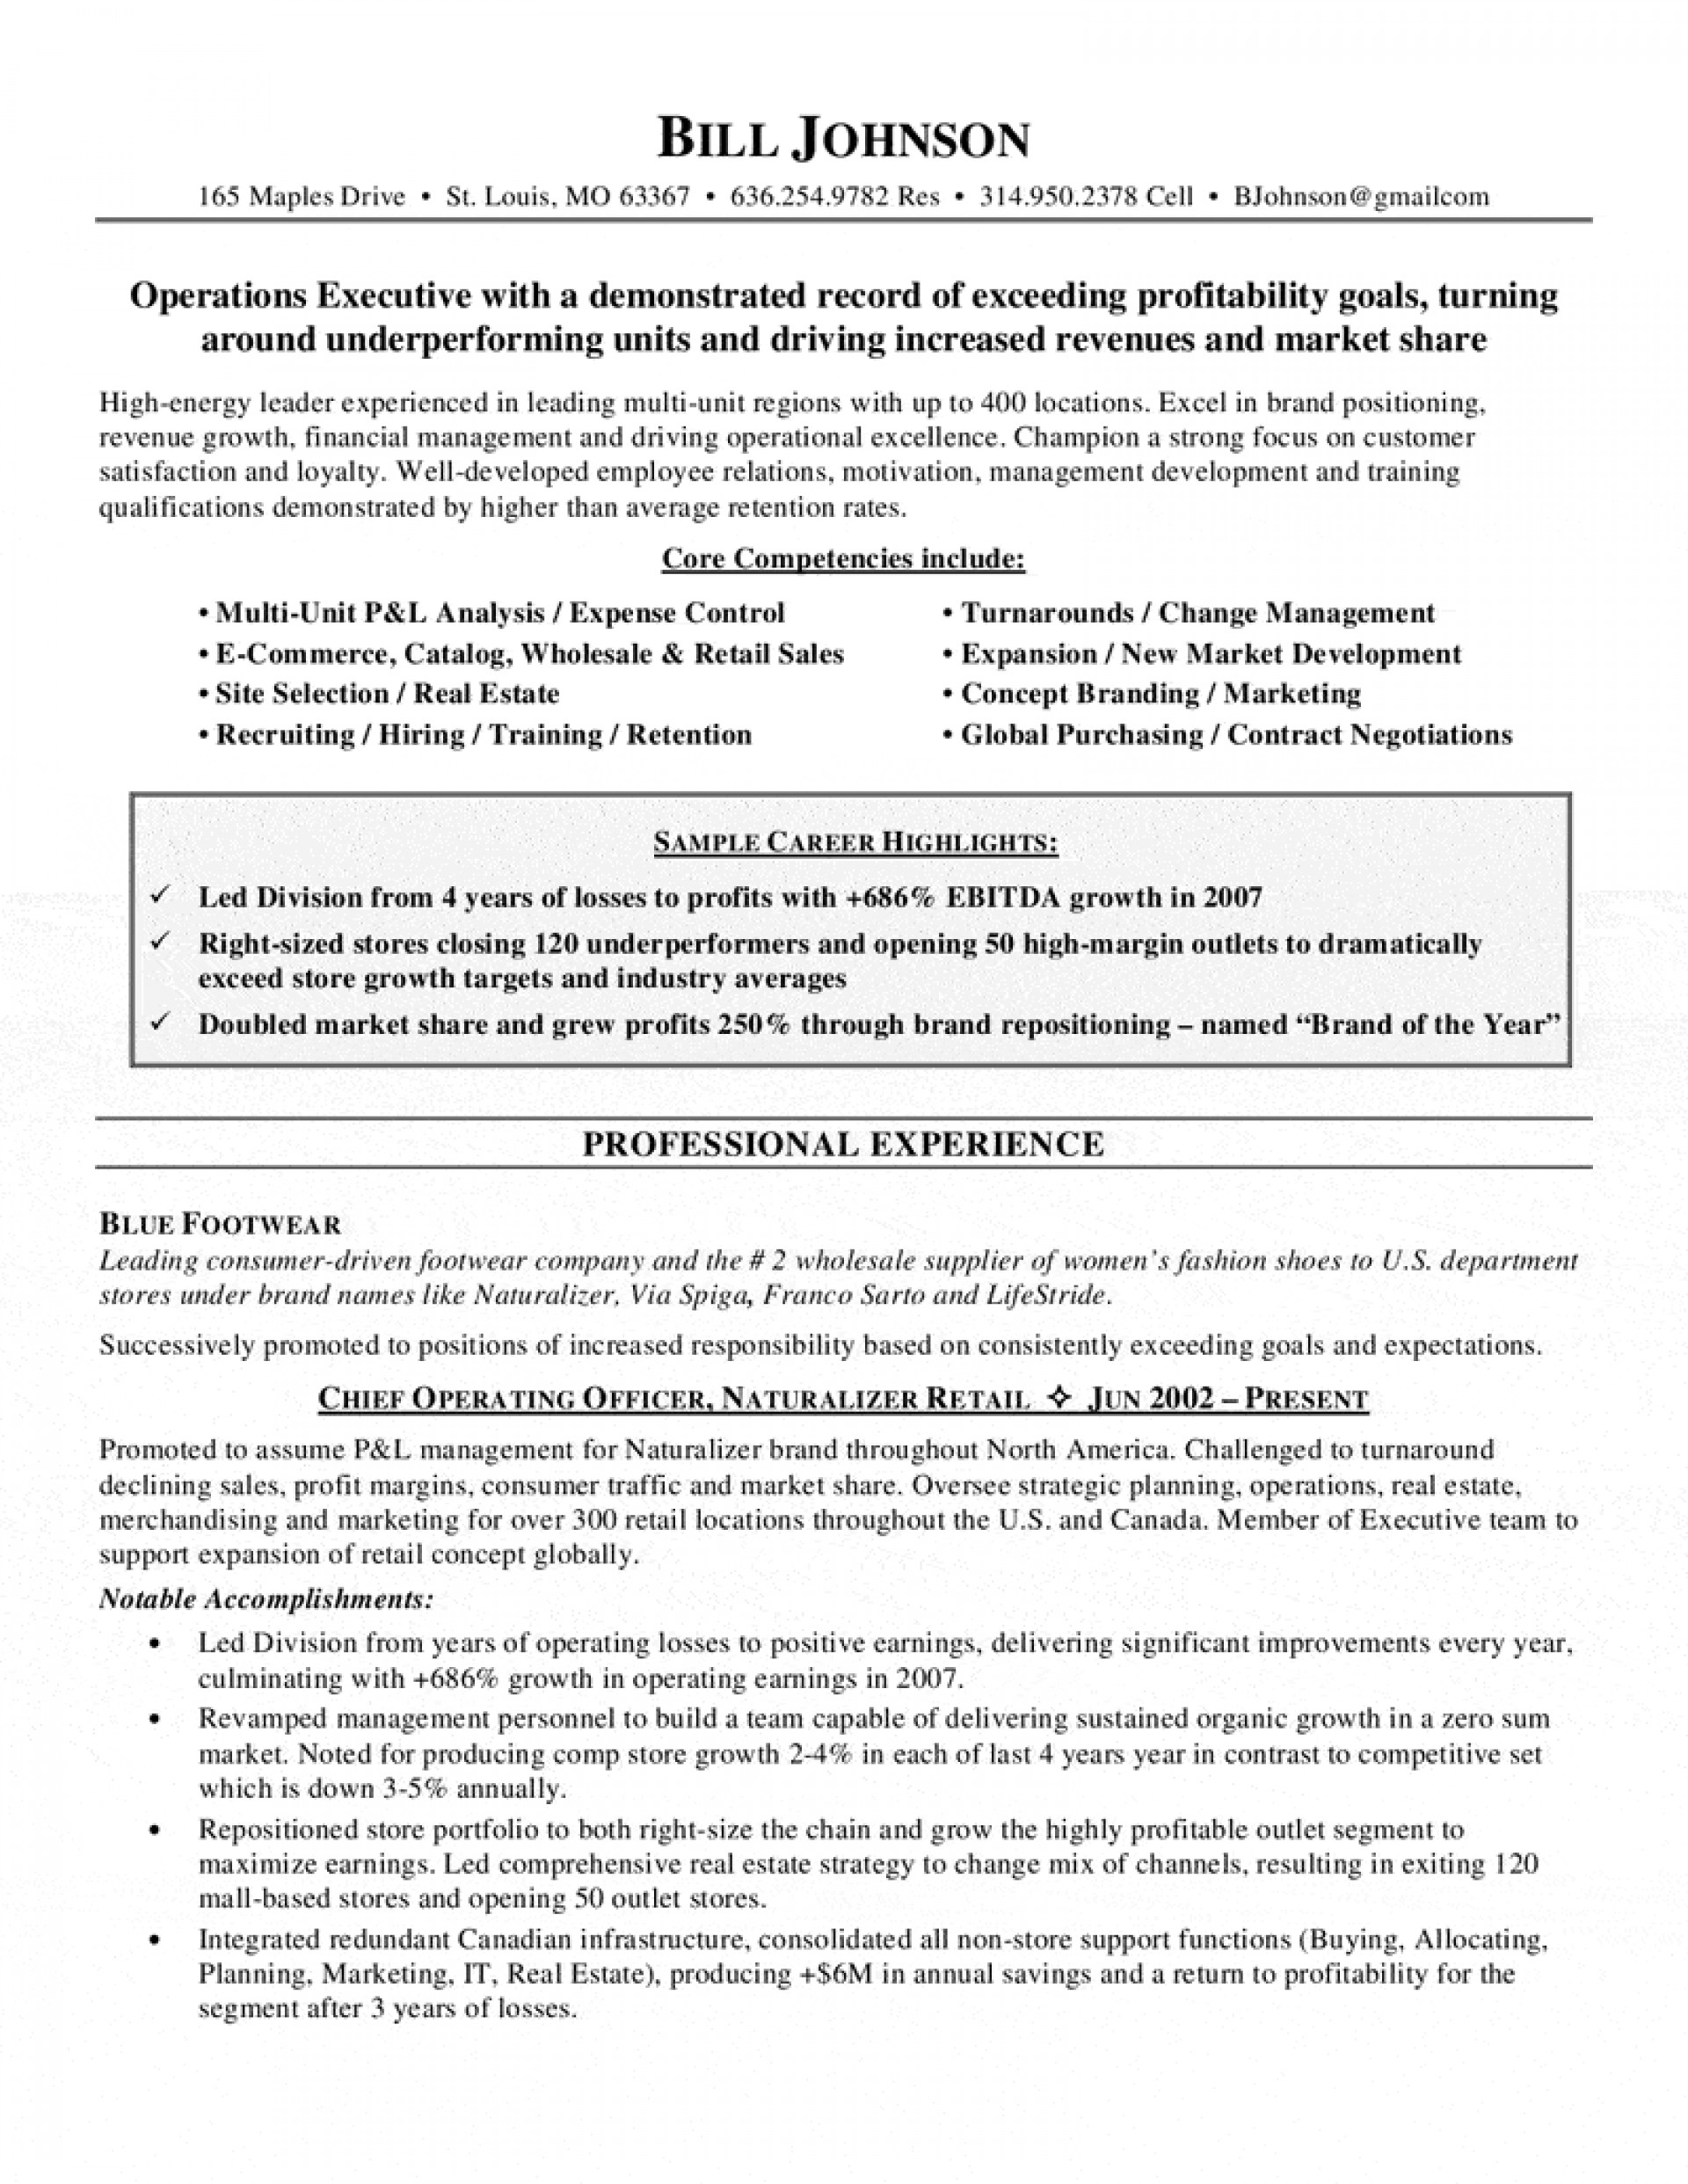 Ecommerce Resume Formats 